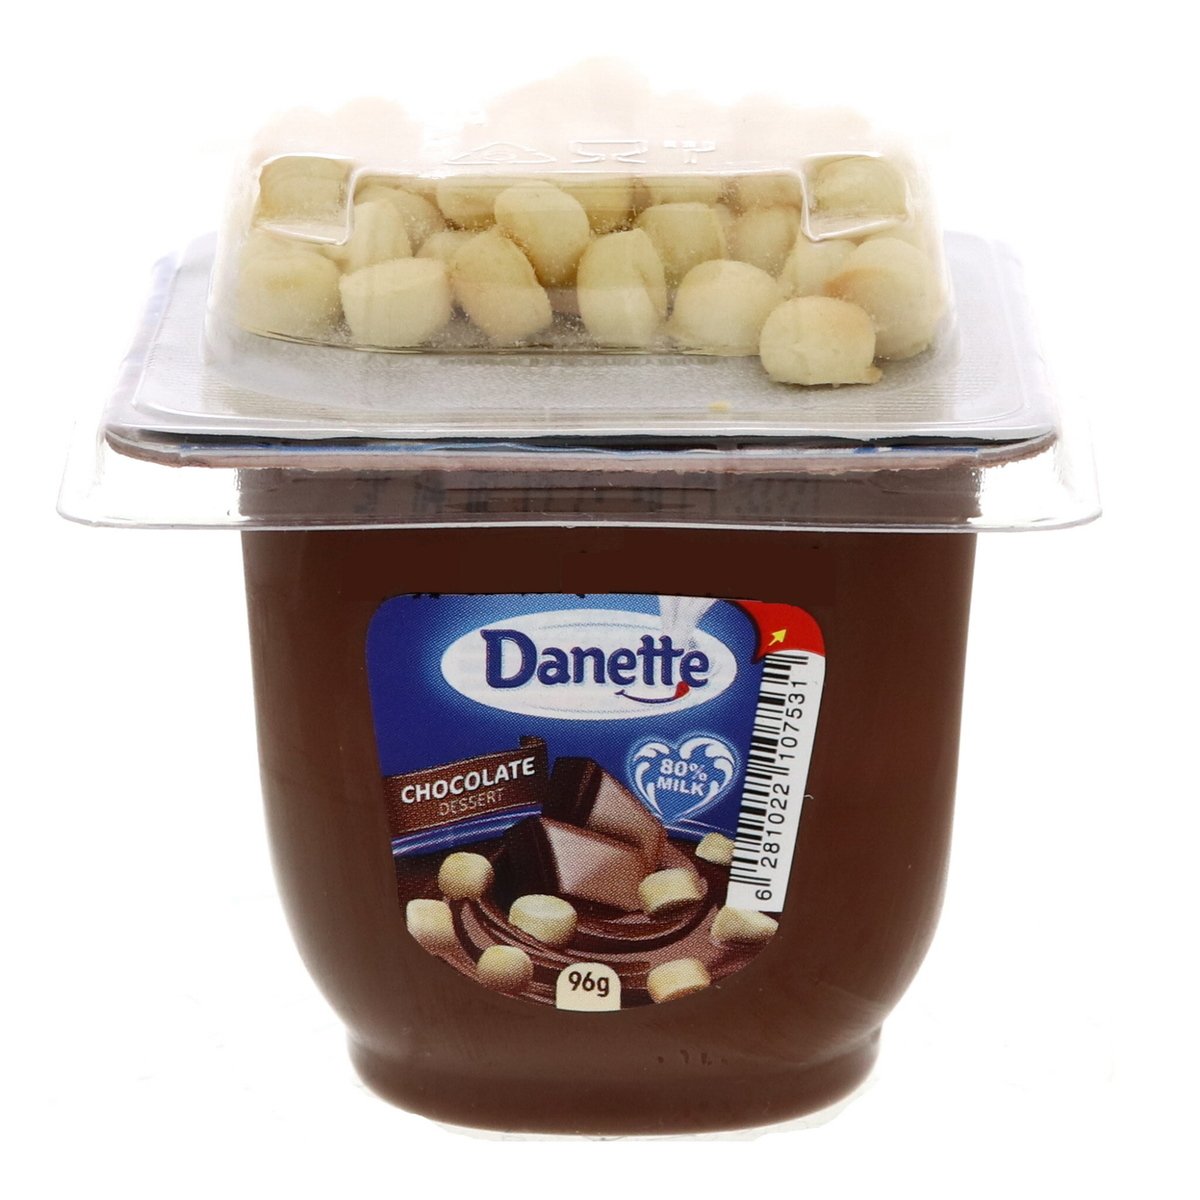 دانيت حلوى الشوكولاته 96جم